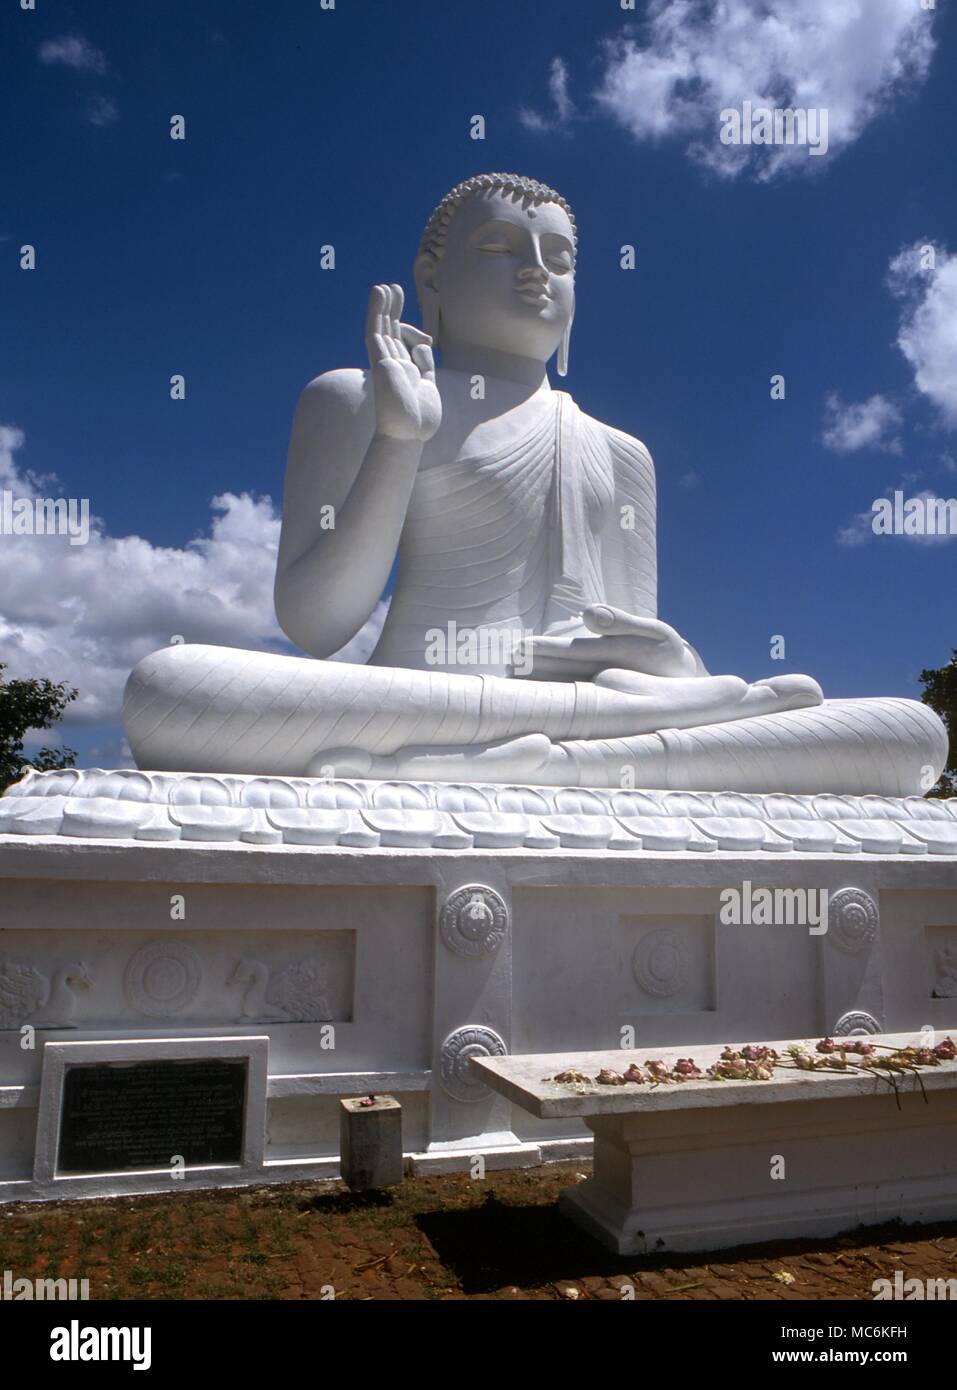 El budismo del gran buda sentado en Rajamaha Viharaya Mihintale Sri Lanka Foto de stock